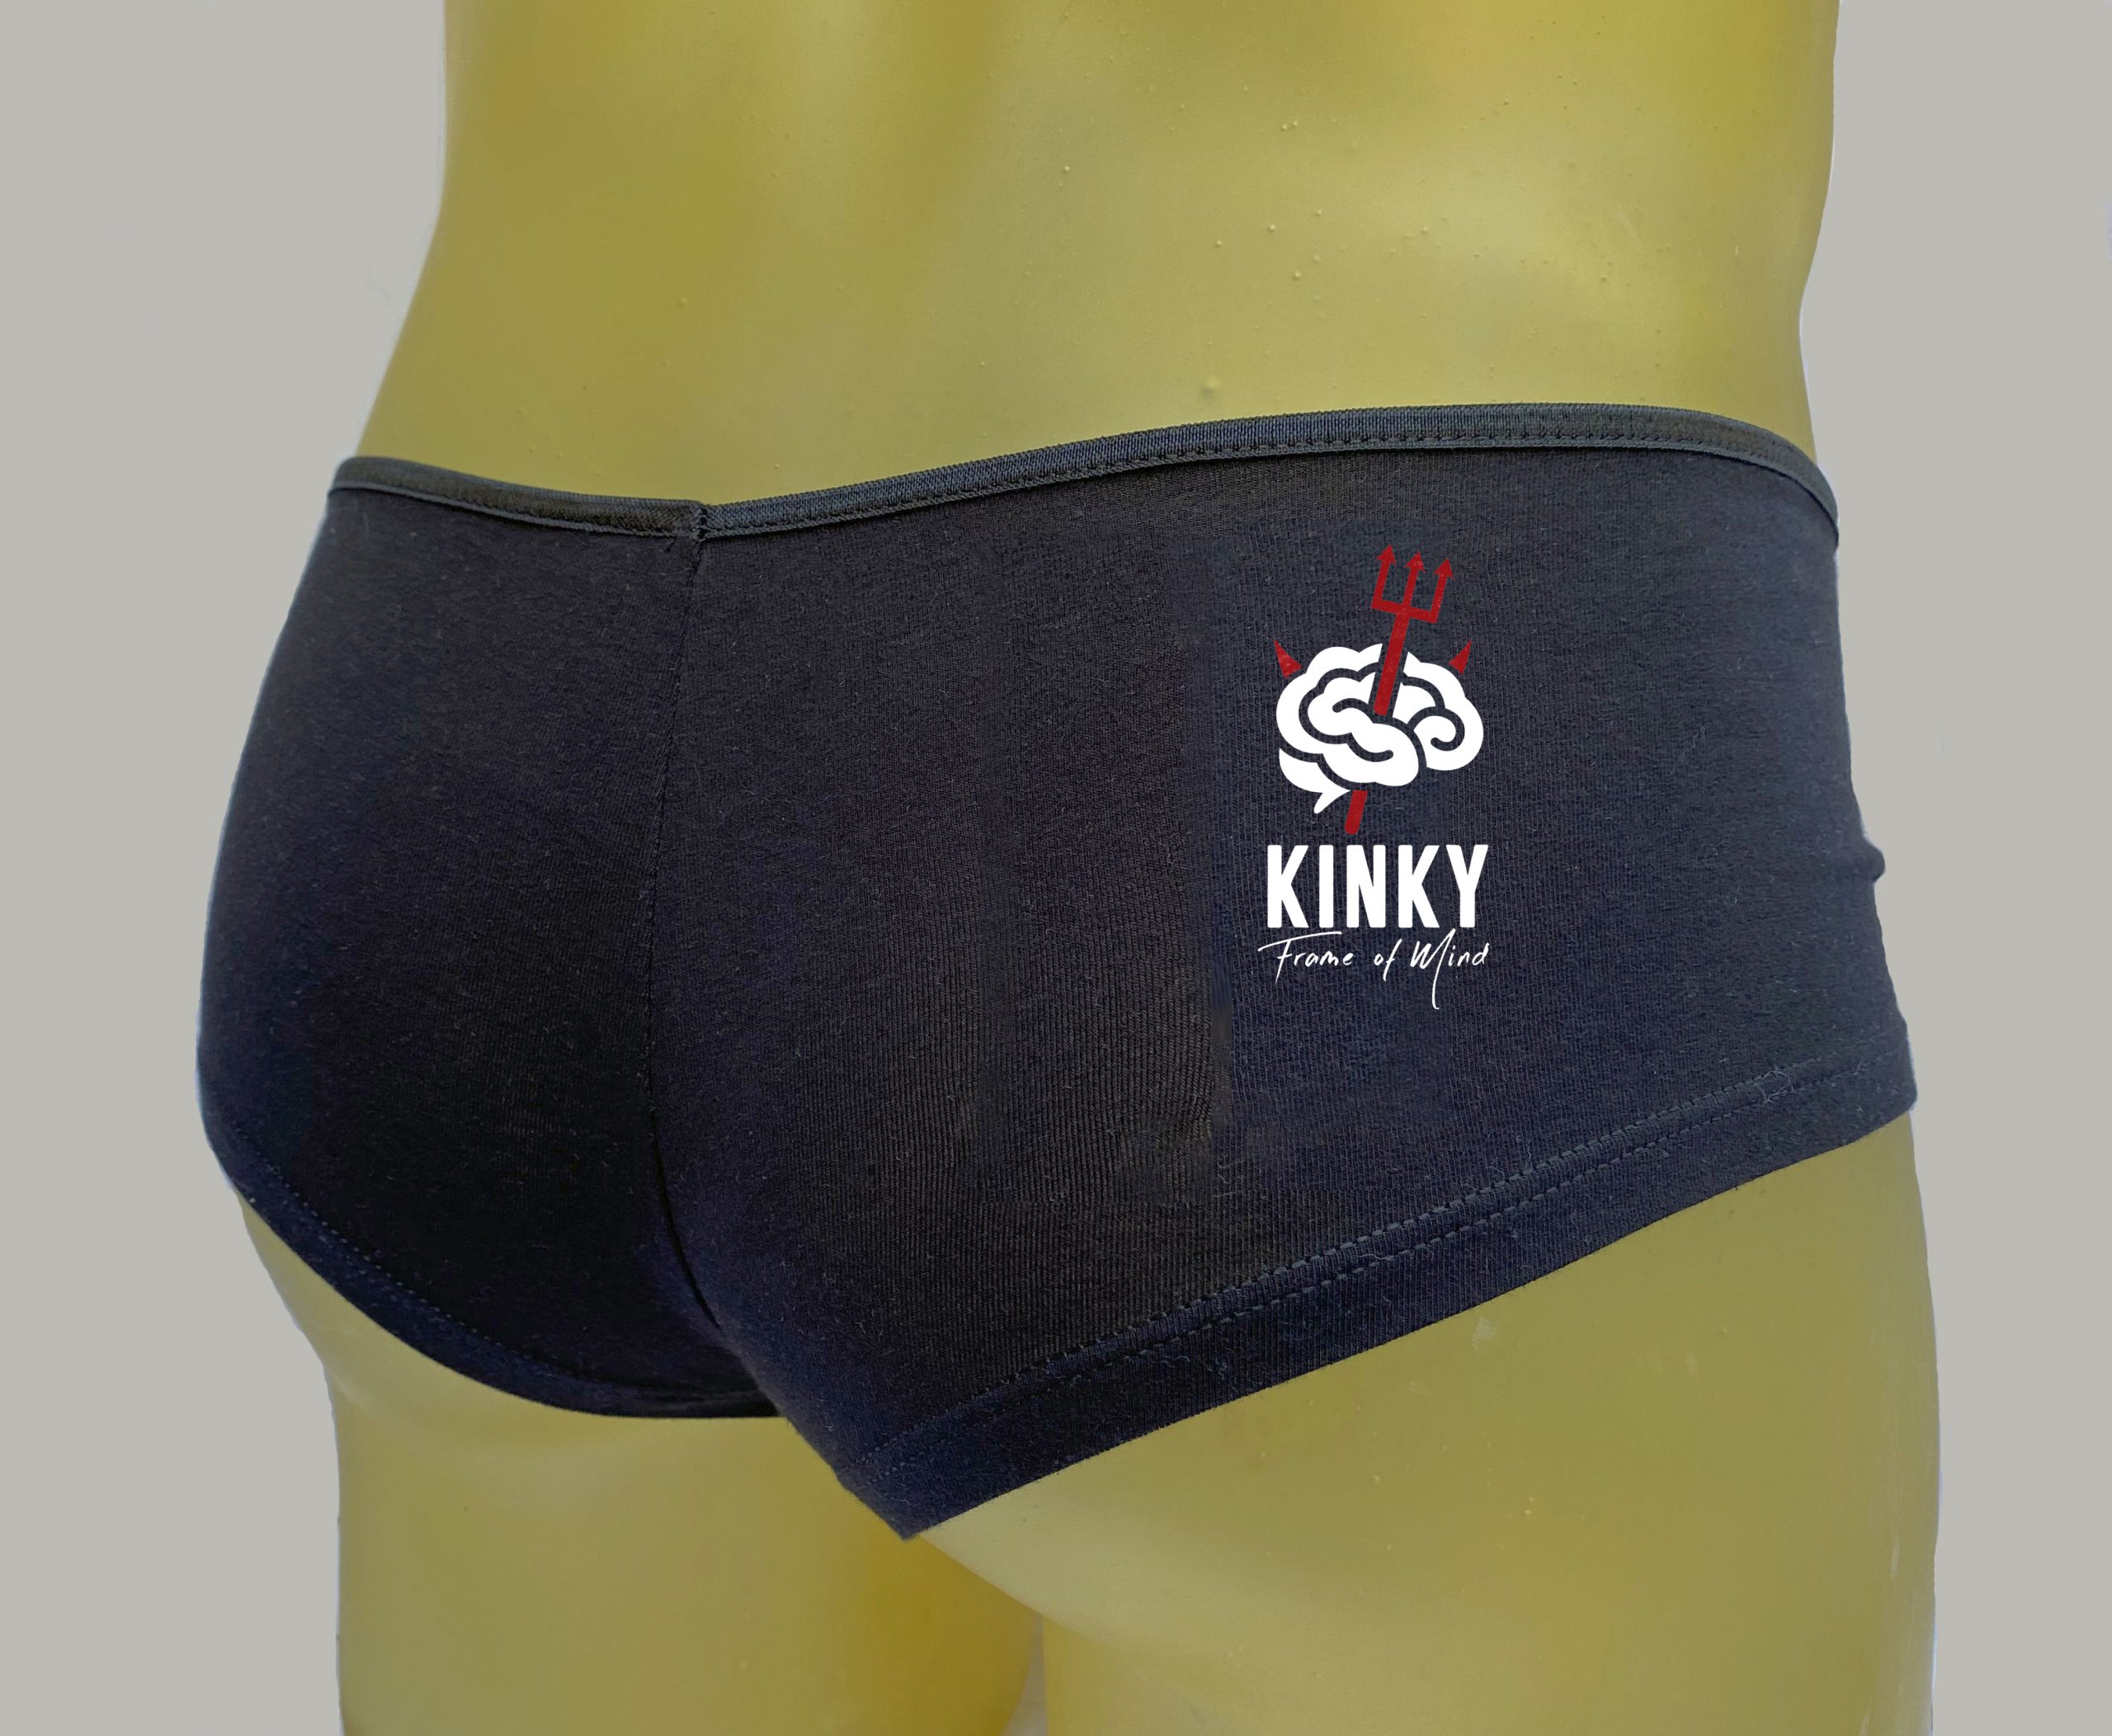 Kinky Frame of Mind Devilish Black Booty Shorts